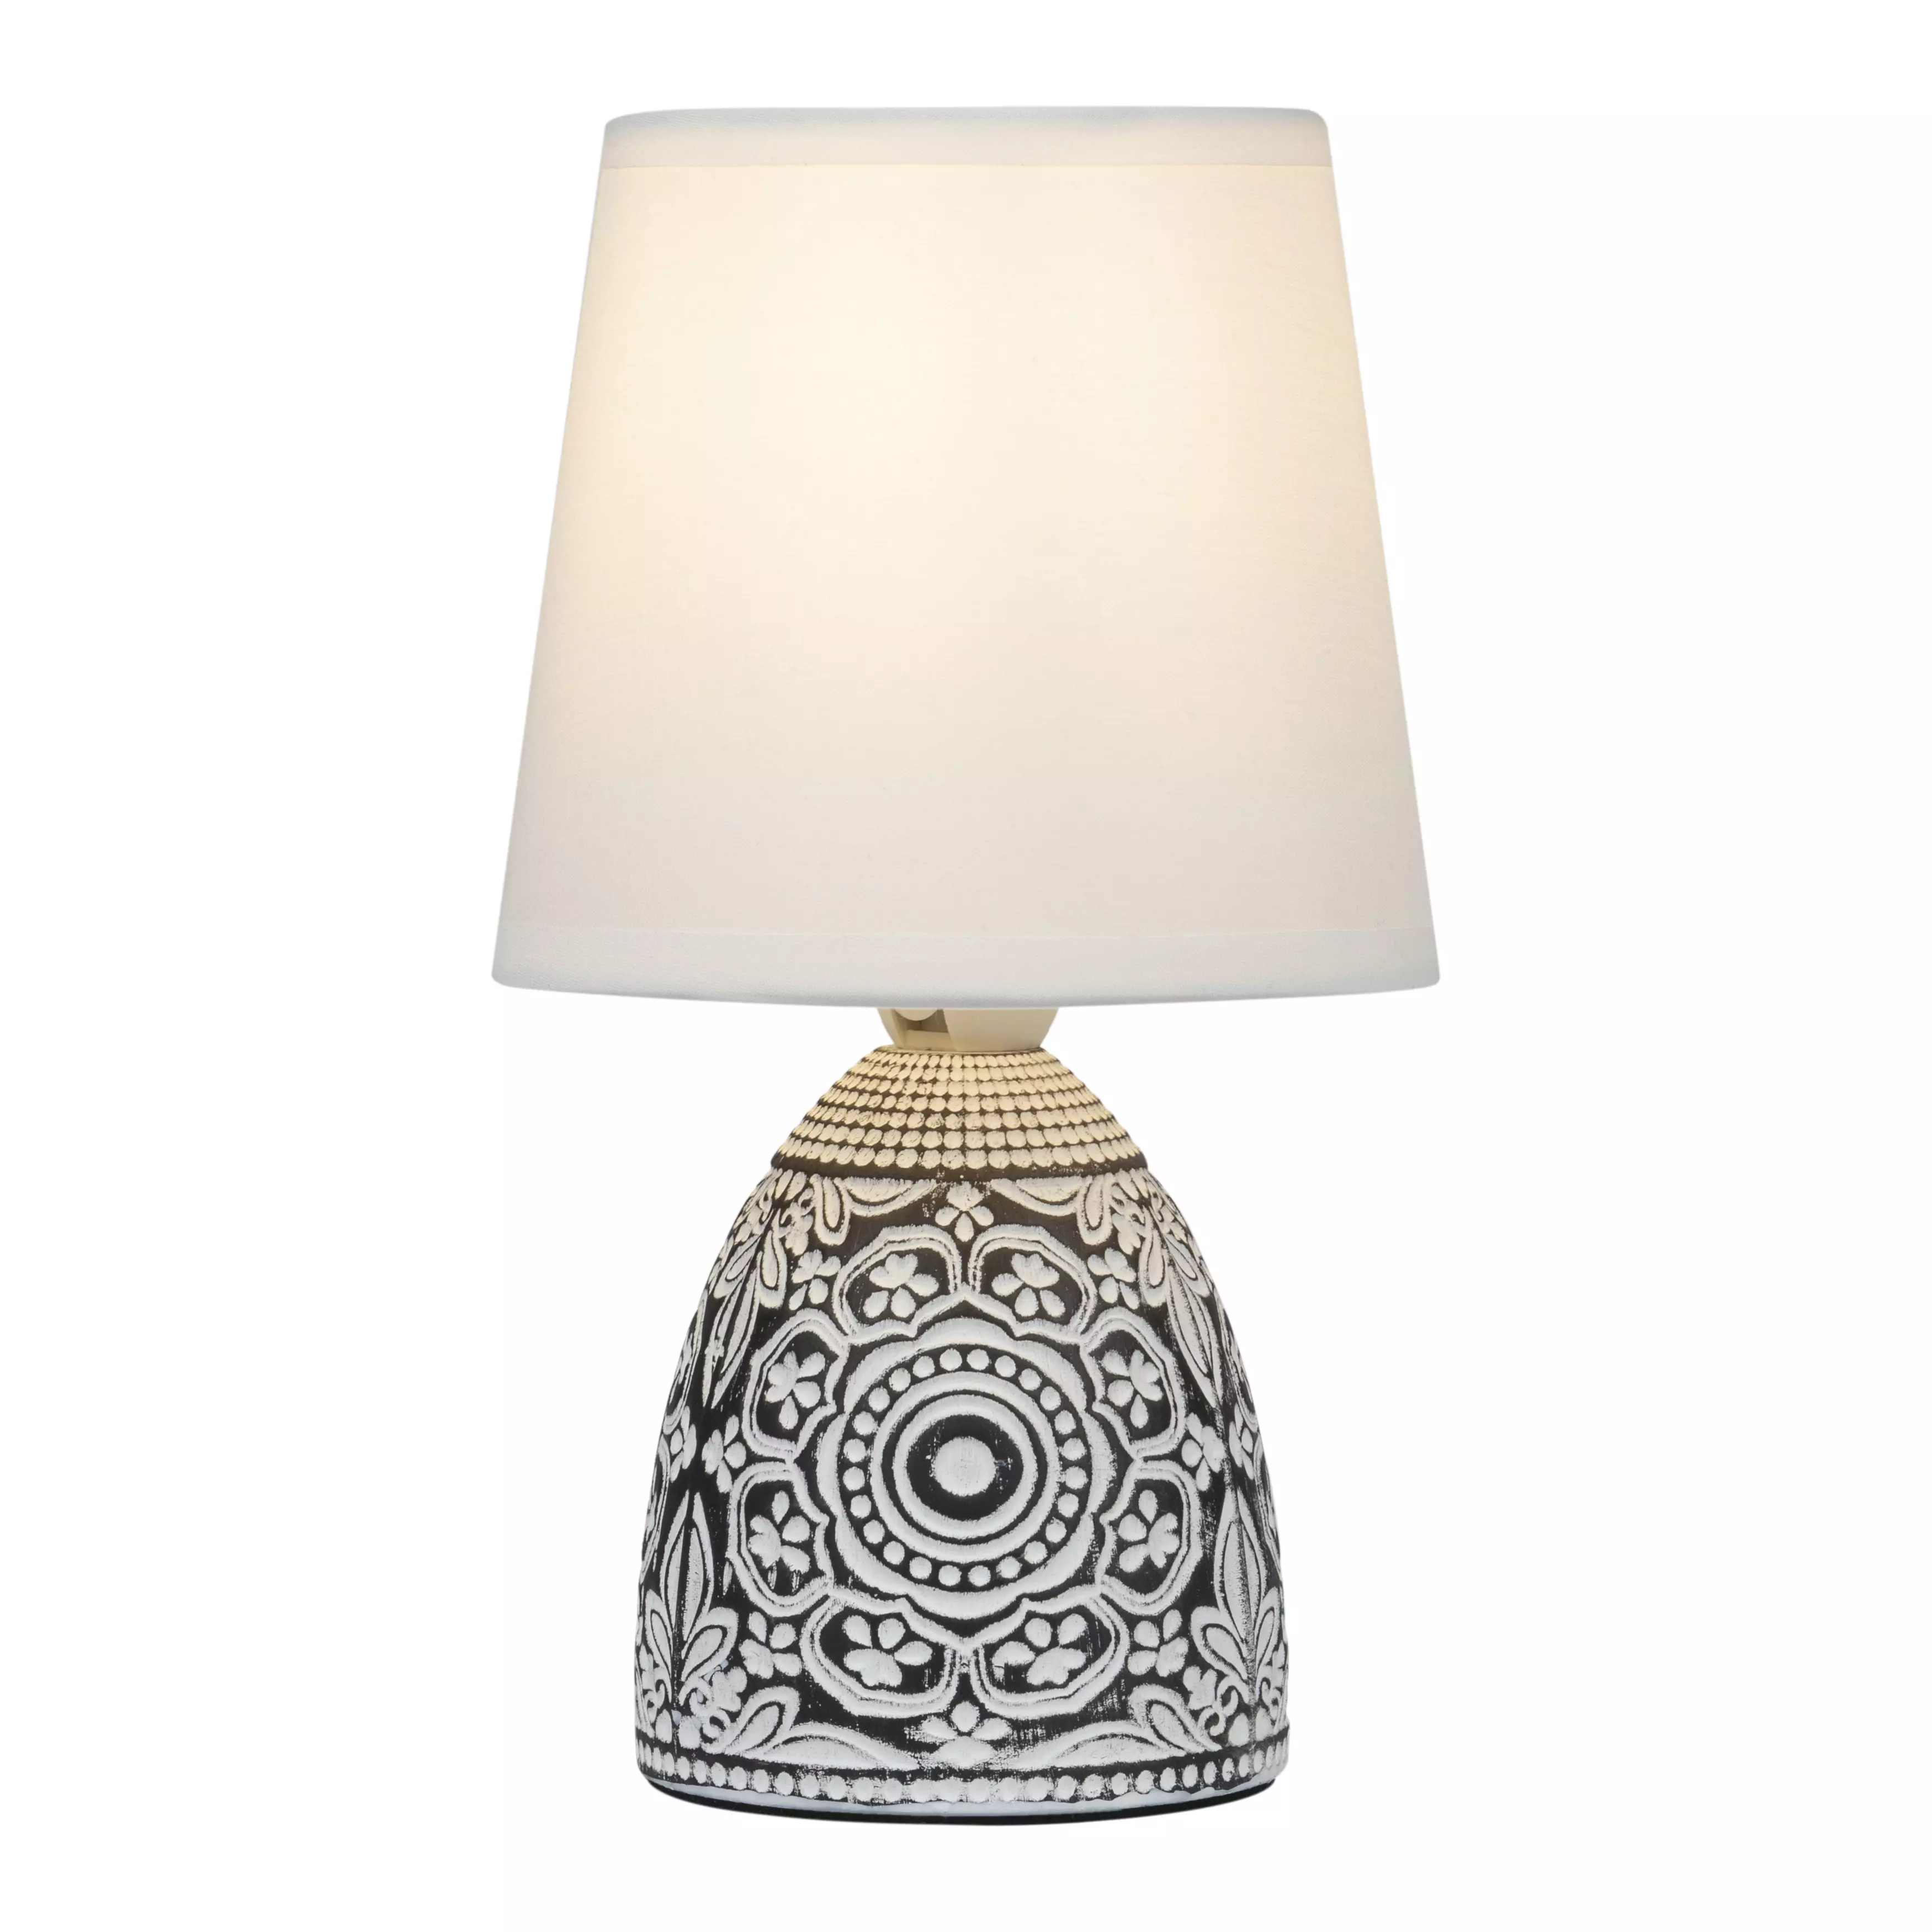 Настольная лампа Rivoli Debora 7045-502 1 * Е14 40 Вт керамика черная с абажуром